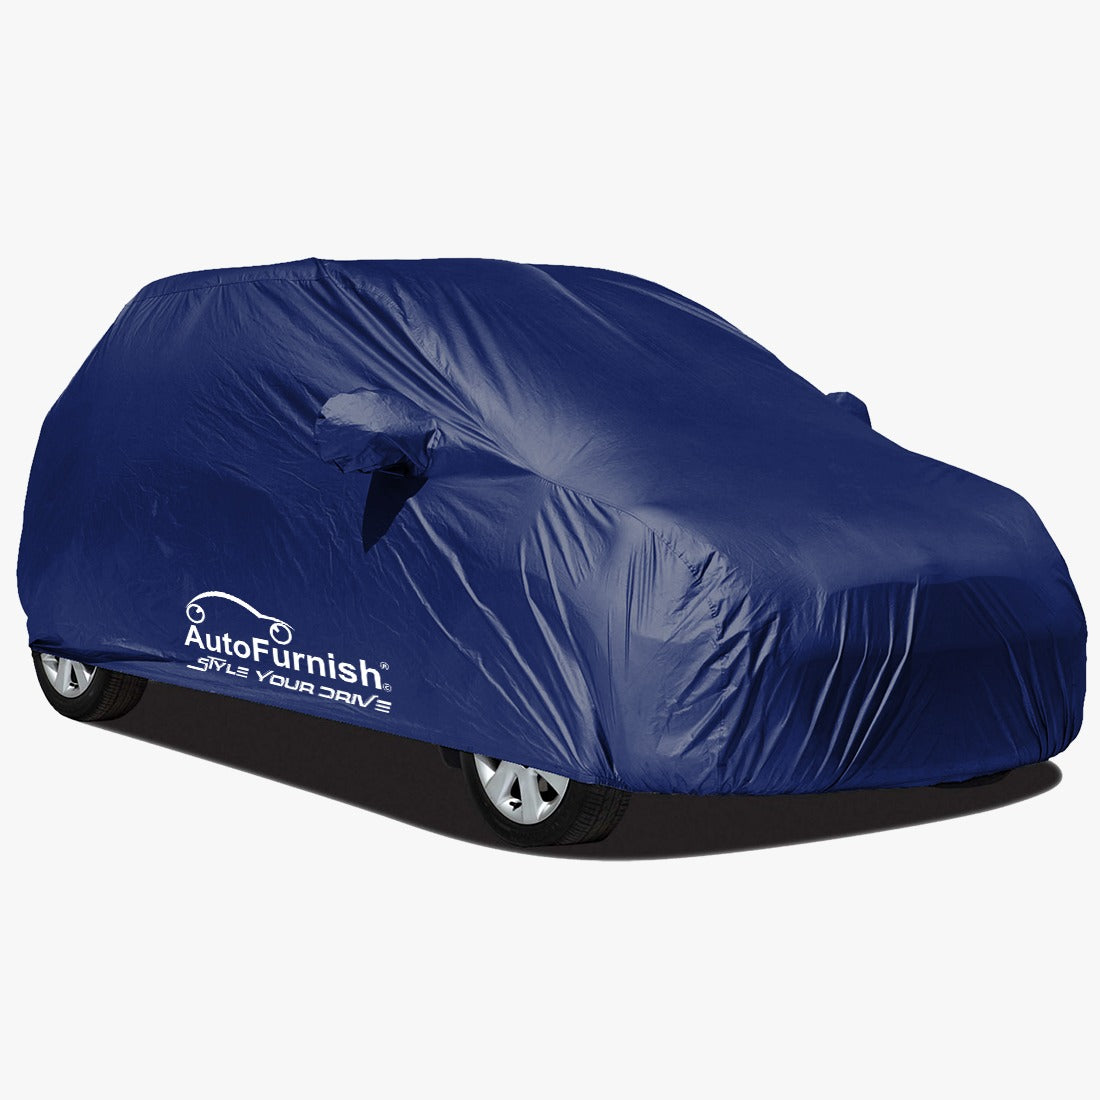 Mahindra Bolero 2012-2014 Car Body Cover, Heat & Water Resistant with Side Mirror Pockets (PARKER BLUE)